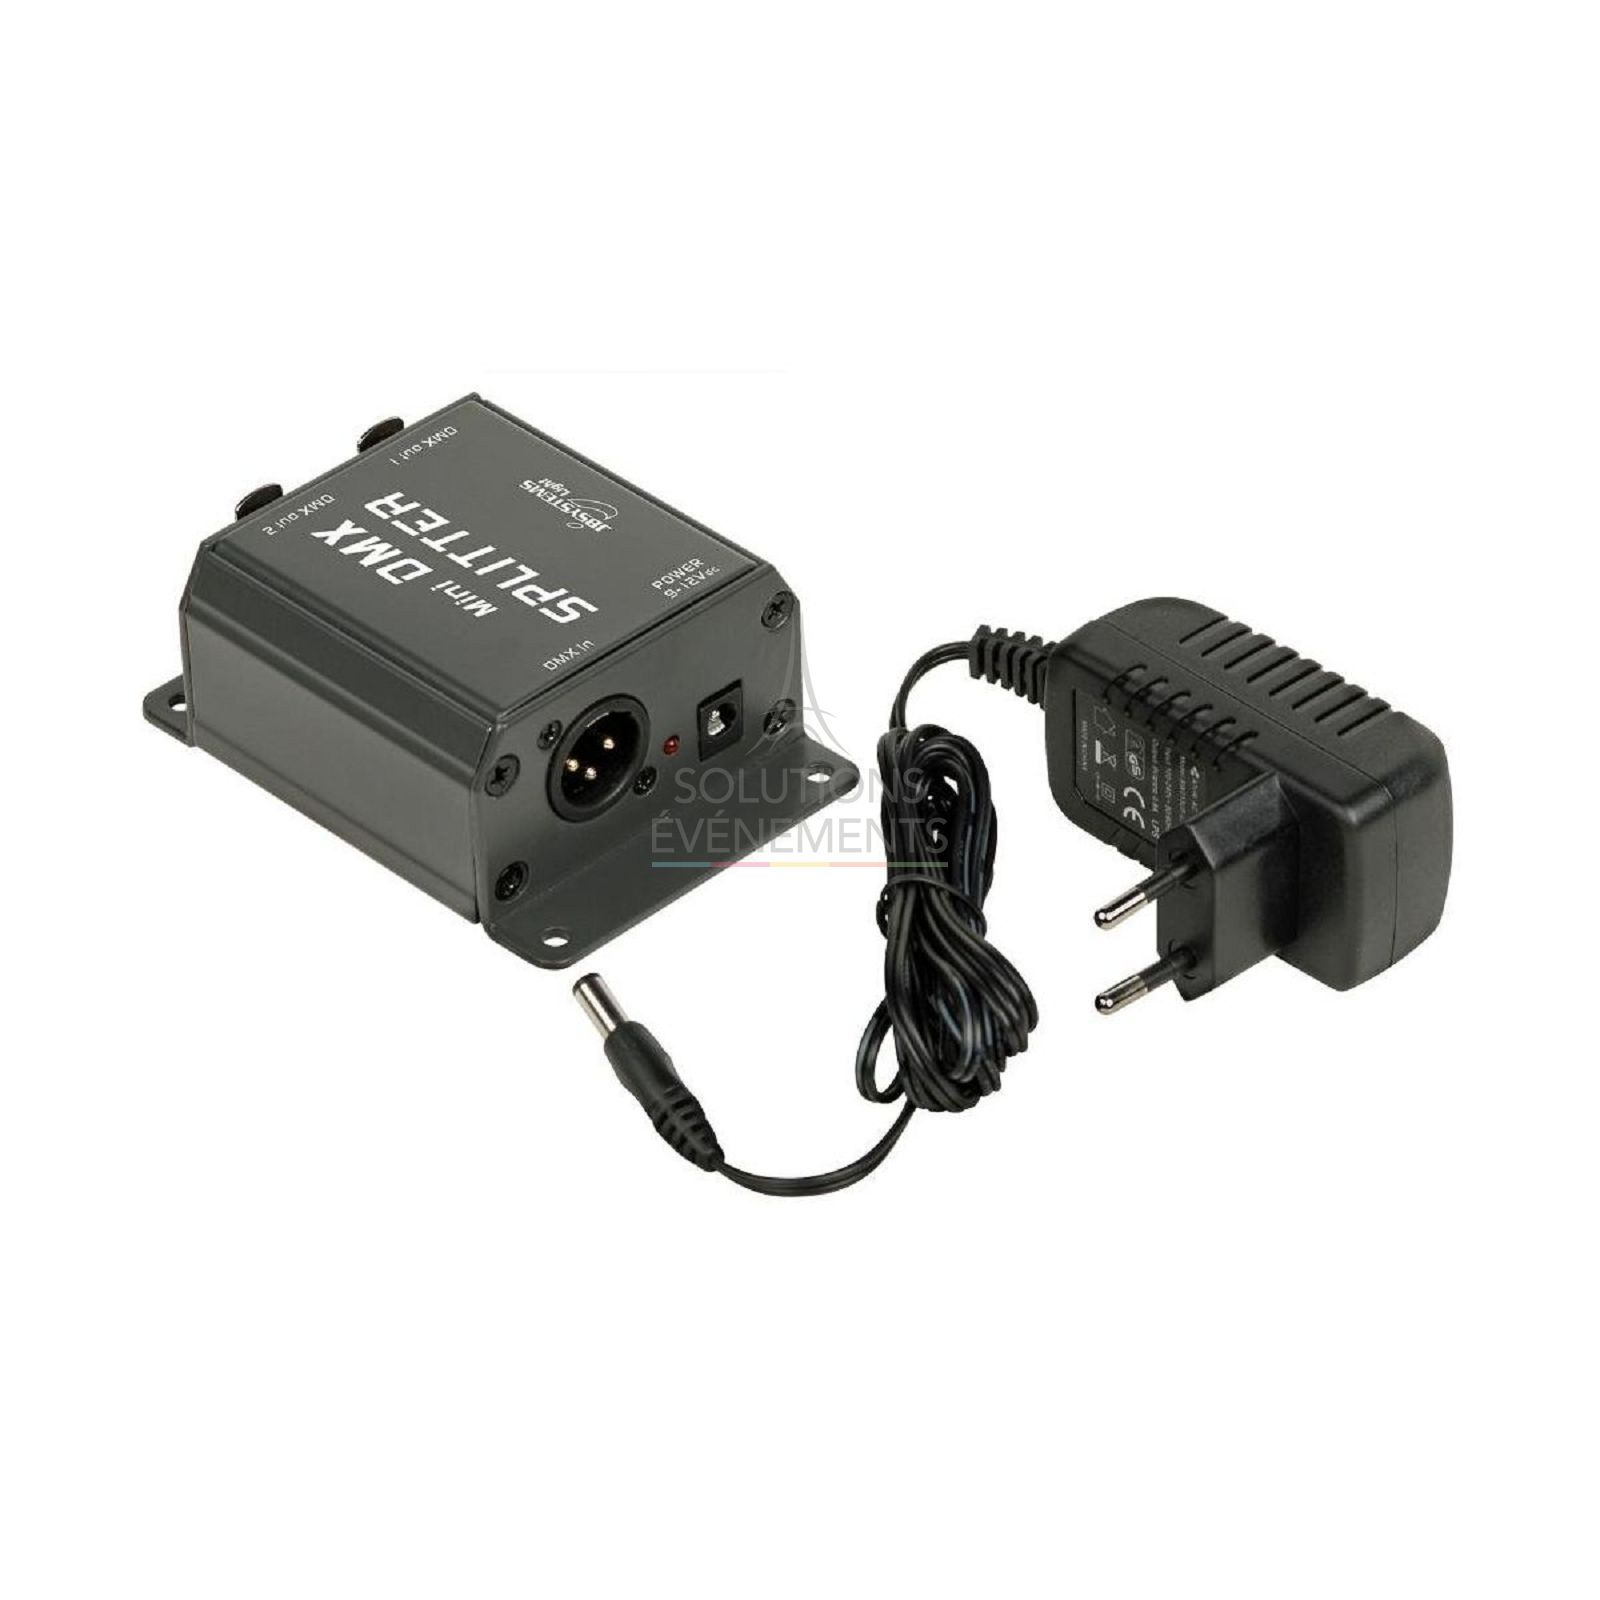 Mini Spitter DMX light controller rental